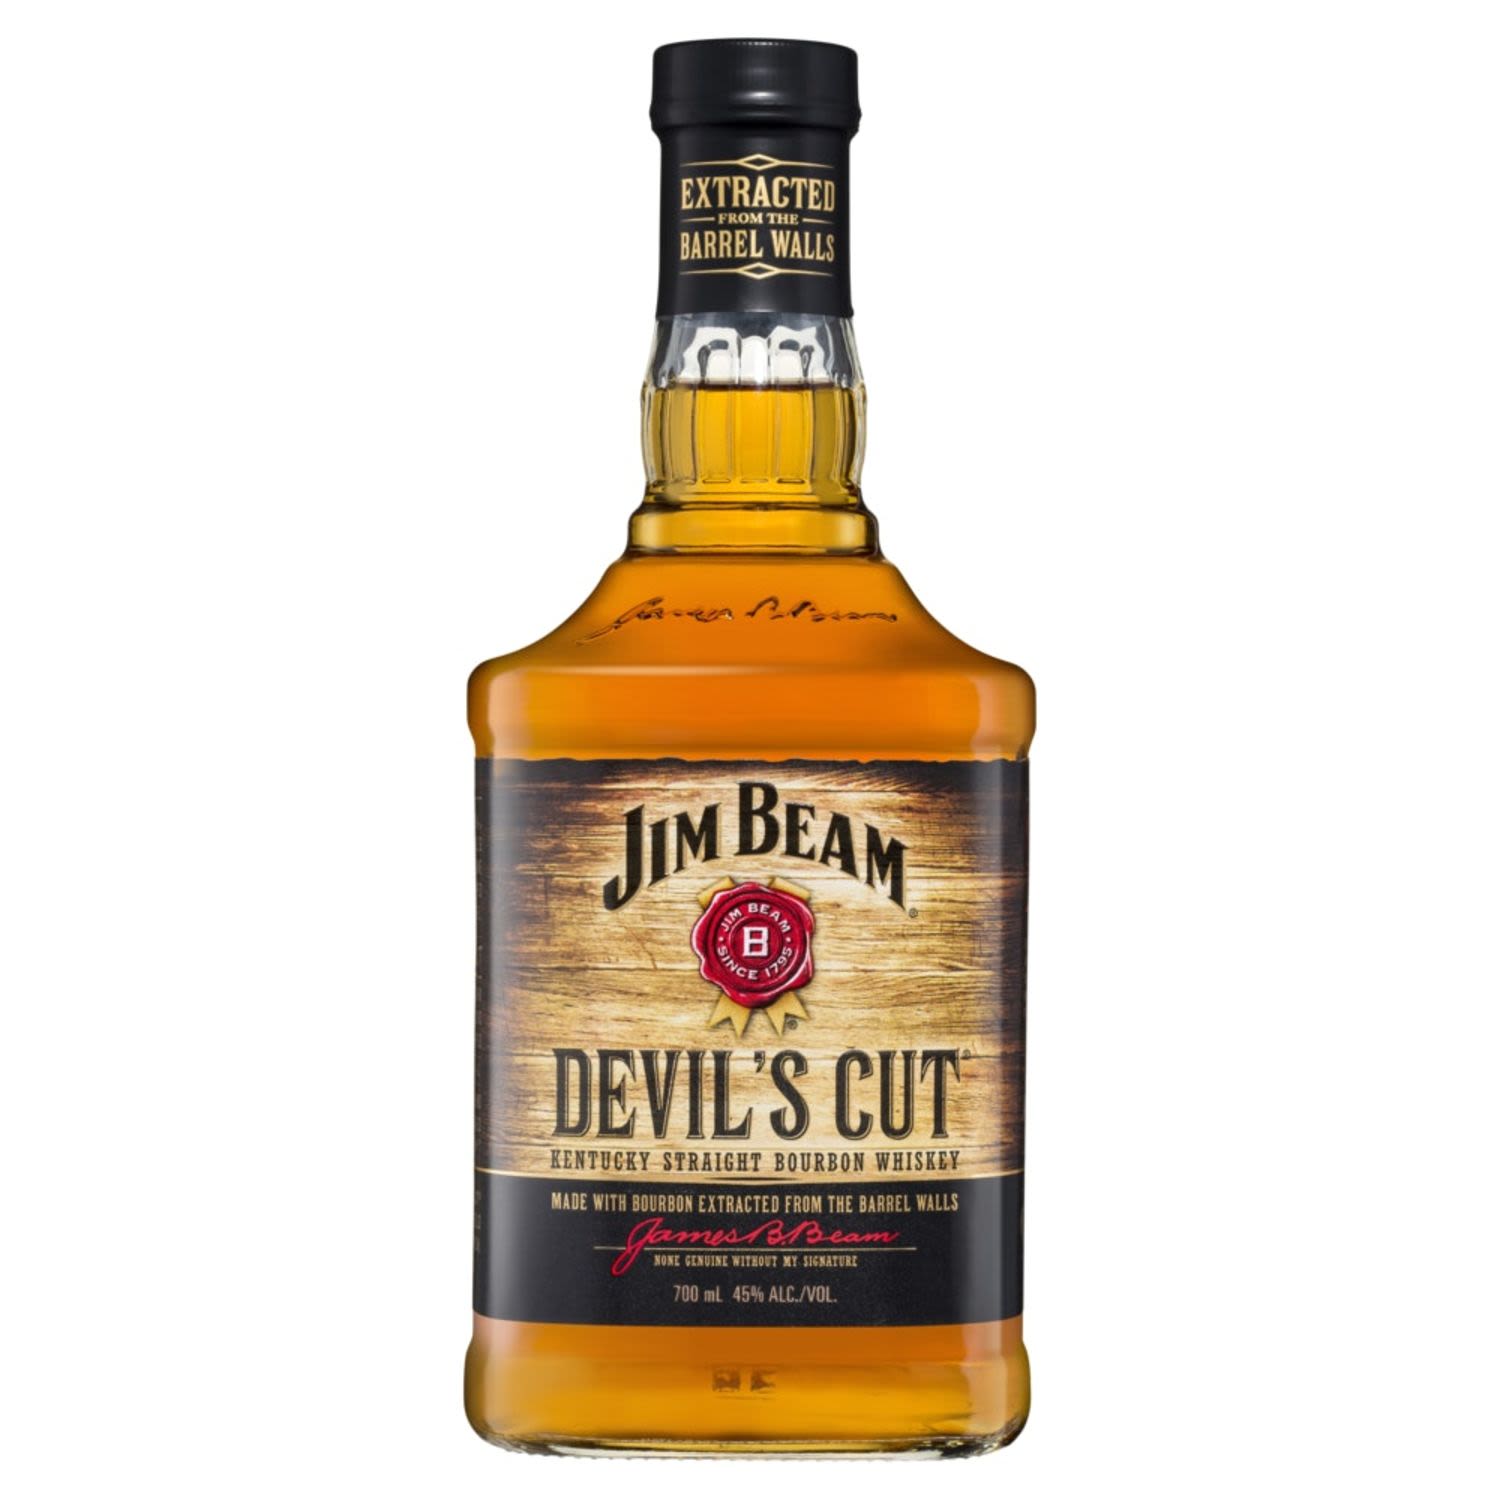 Jim Beam Devil's Cut 700mL 6 Pack